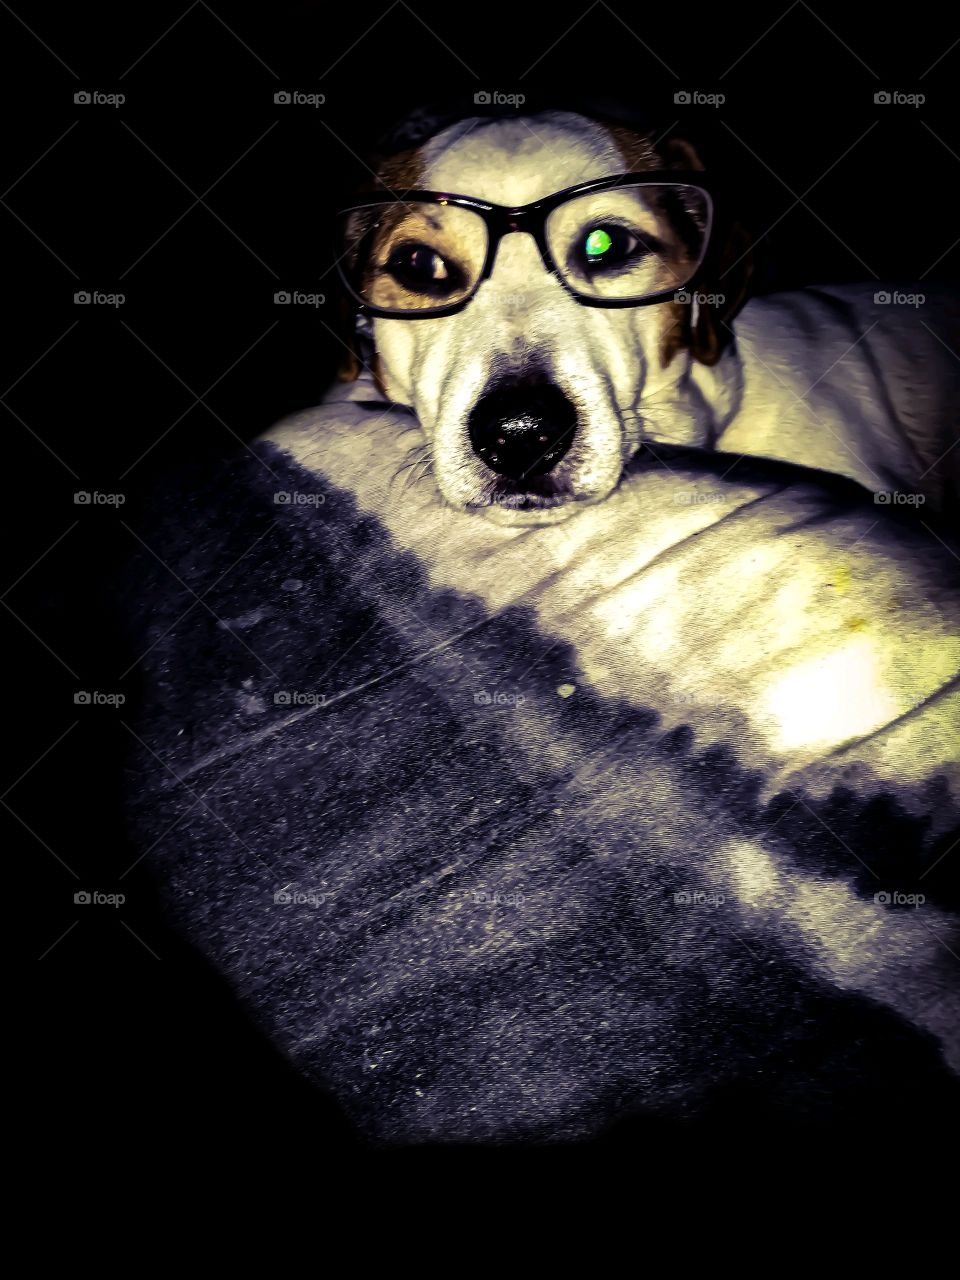 Professor doggo